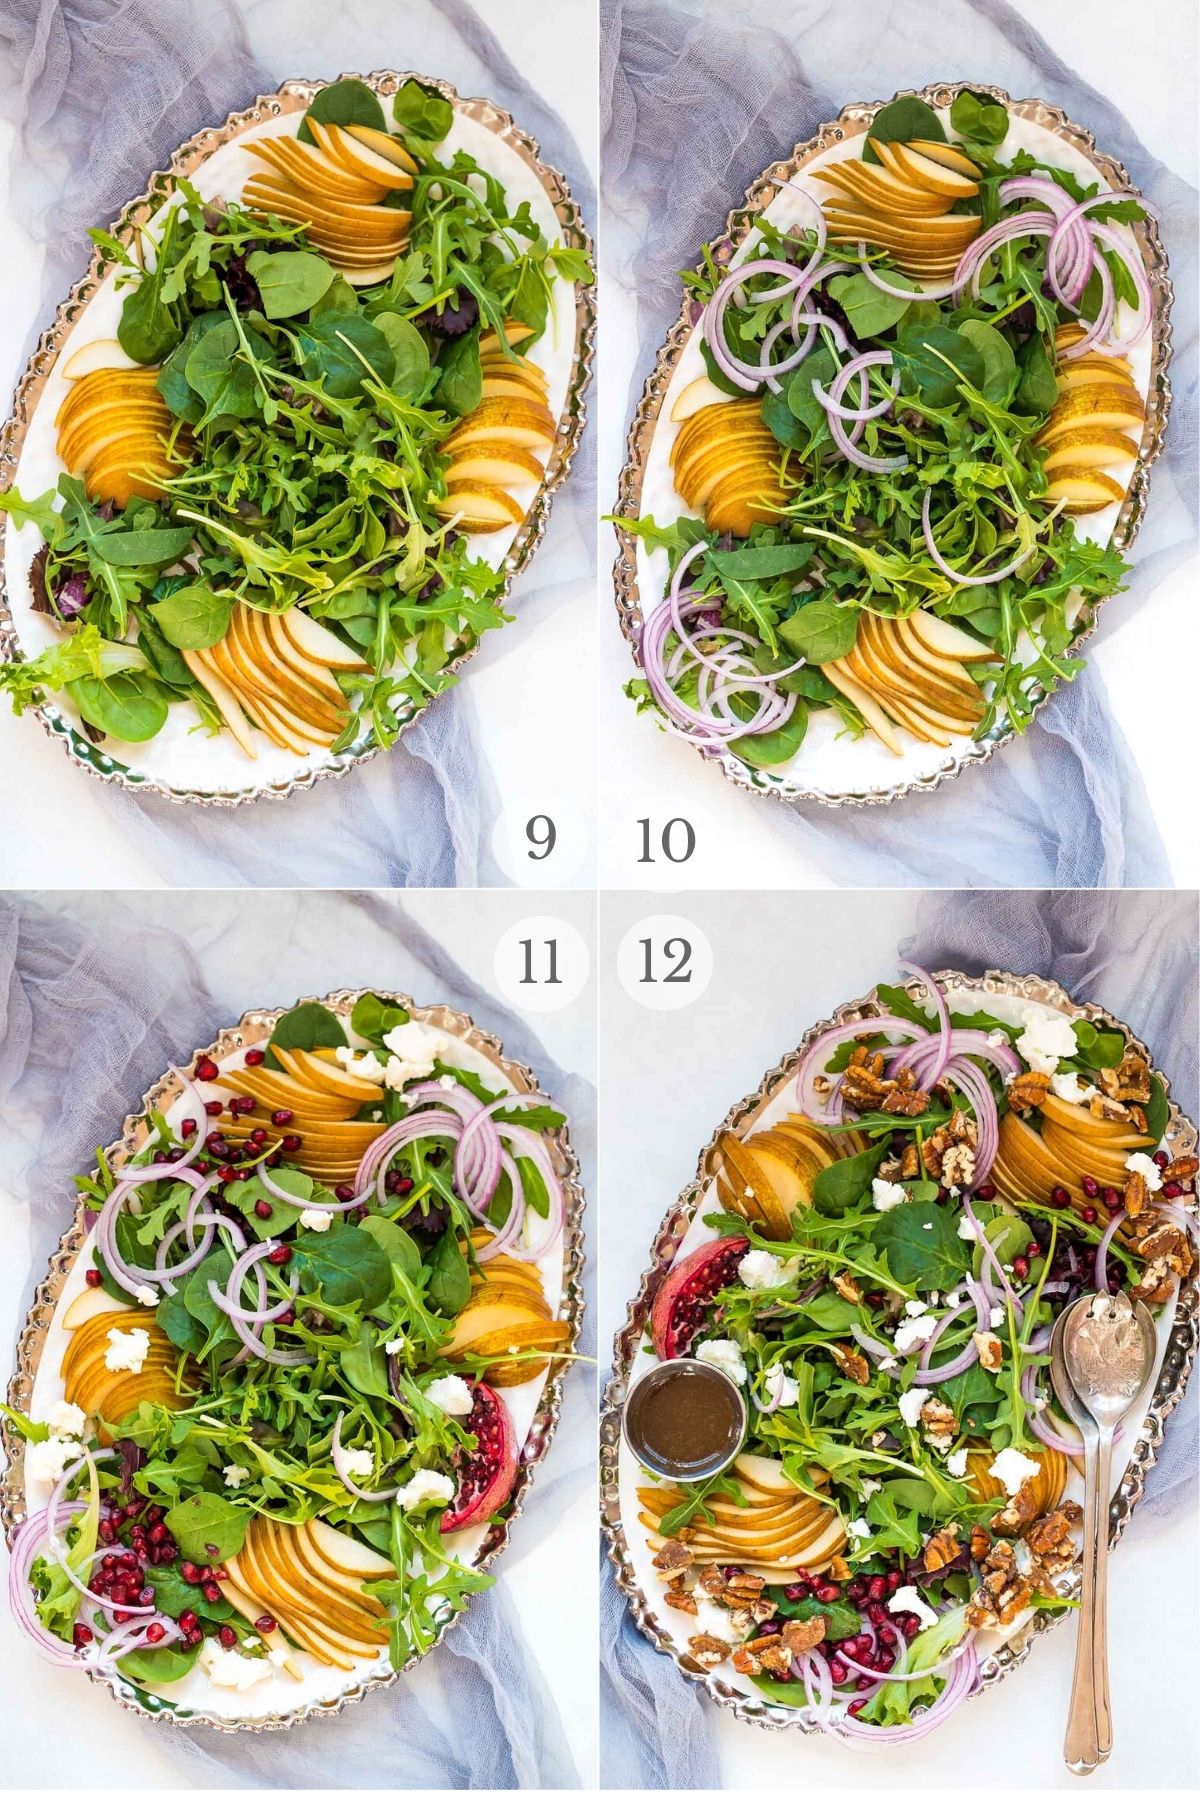 pear salad recipe steps 9-12.